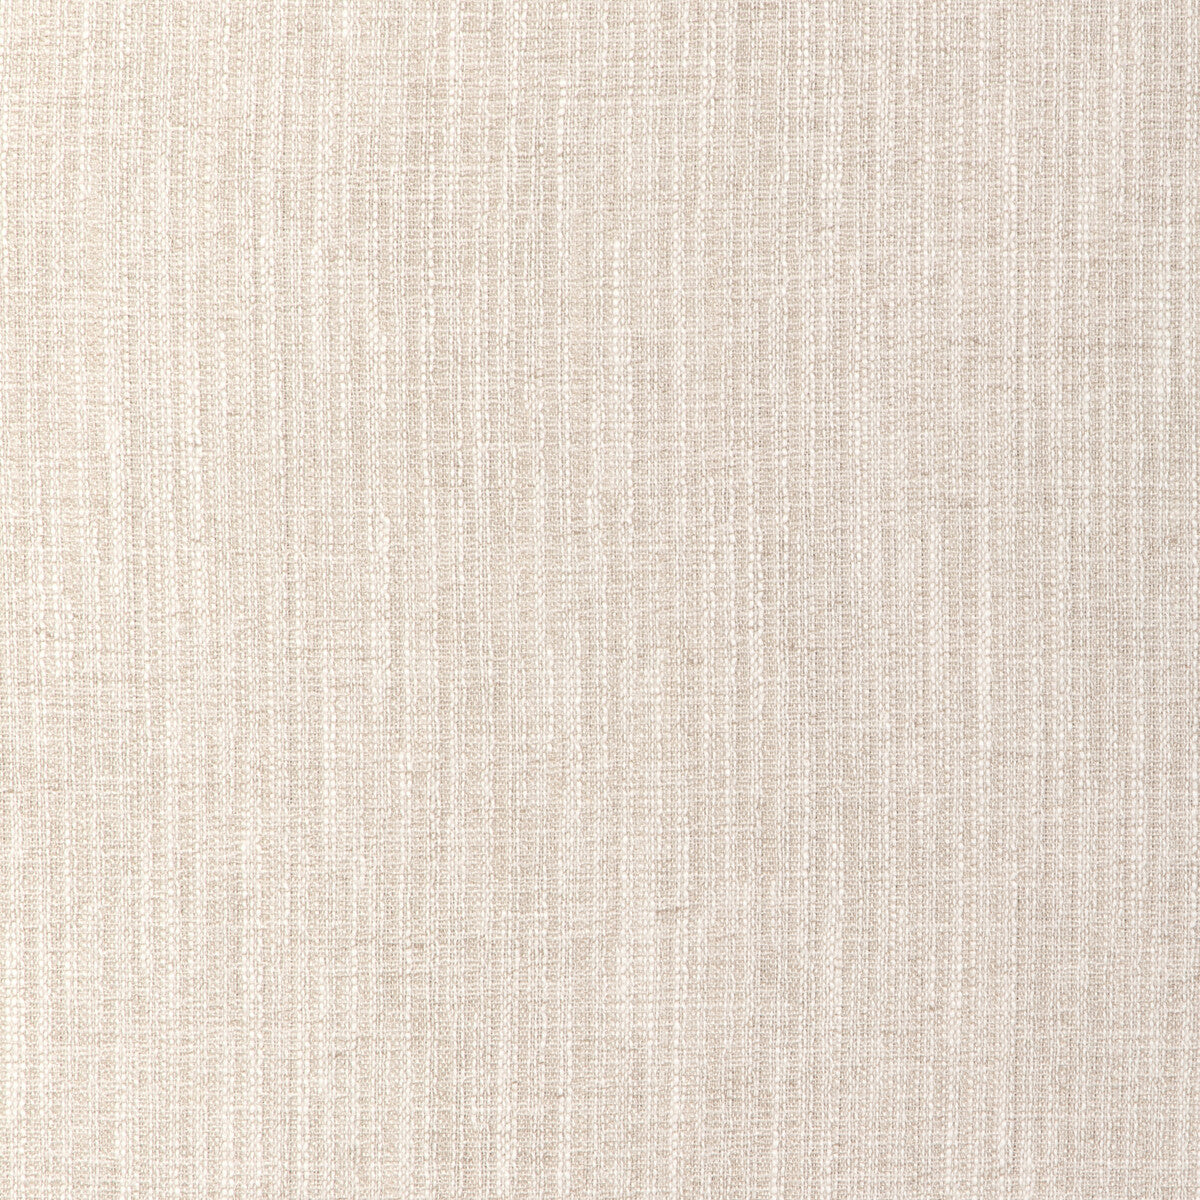 Kravet Smart fabric in 36658-16 color - pattern 36658.16.0 - by Kravet Smart in the Performance Kravetarmor collection